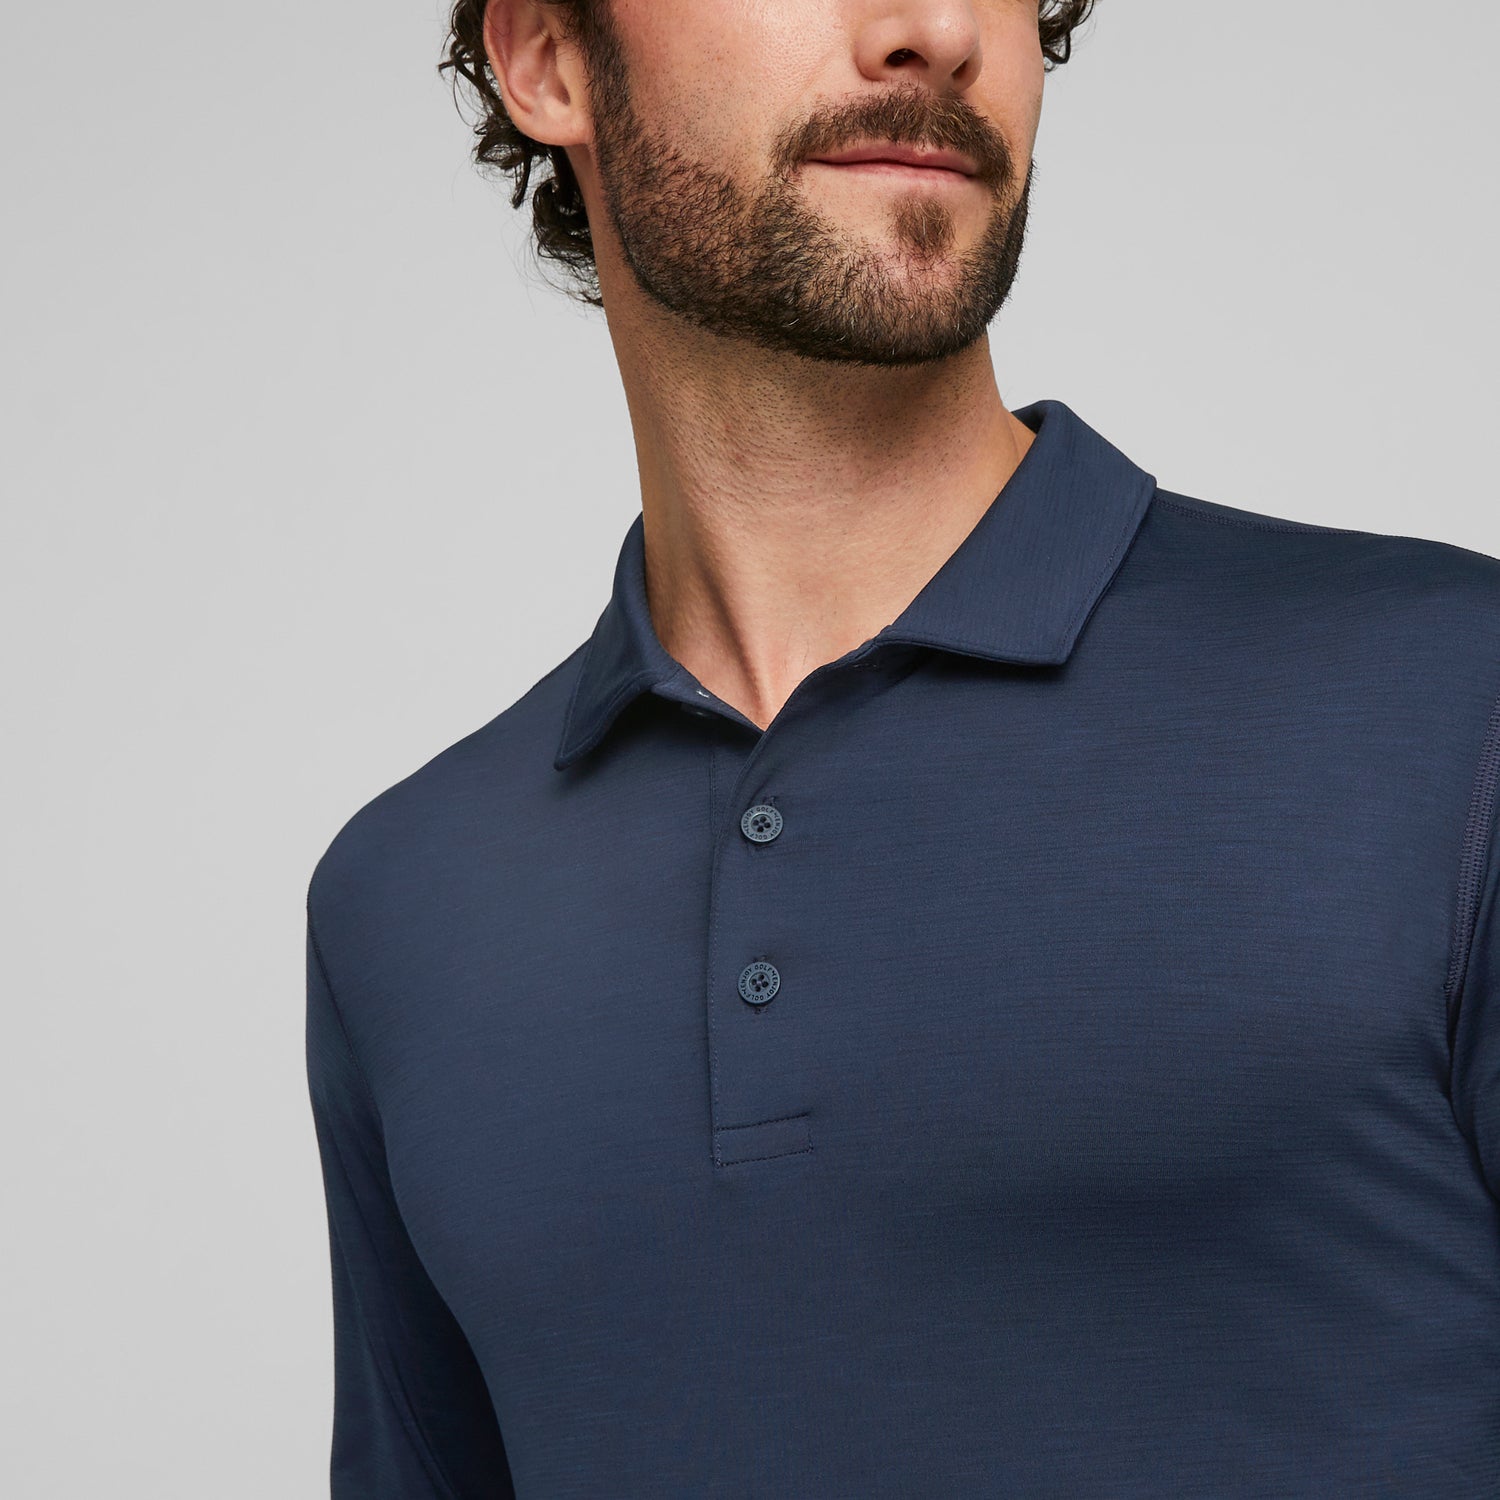  JWM Men's Long Sleeve Golf Polo Shirts - Athletic